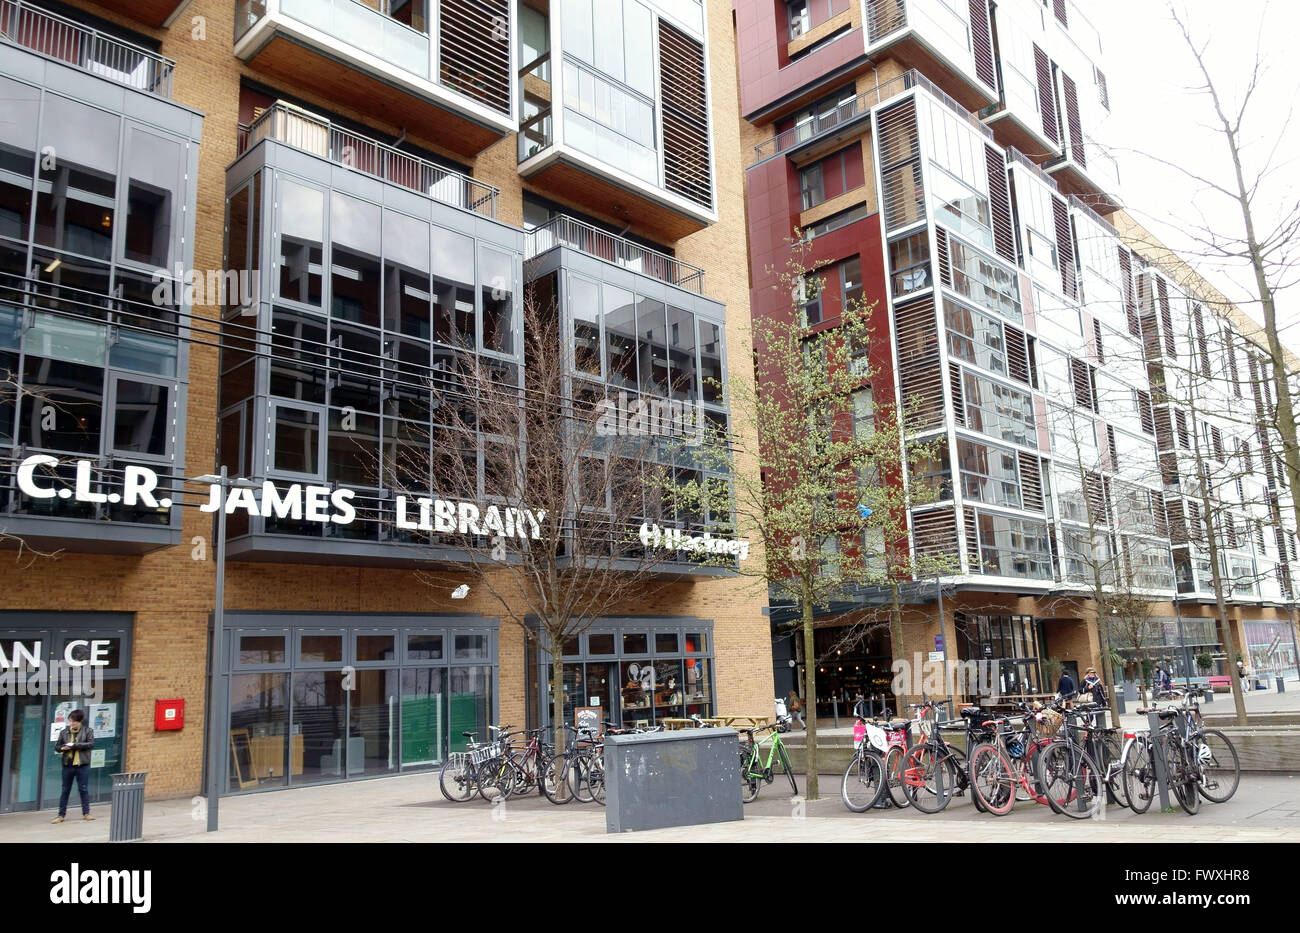 C L R James Library, Dalston, London Stock Photo